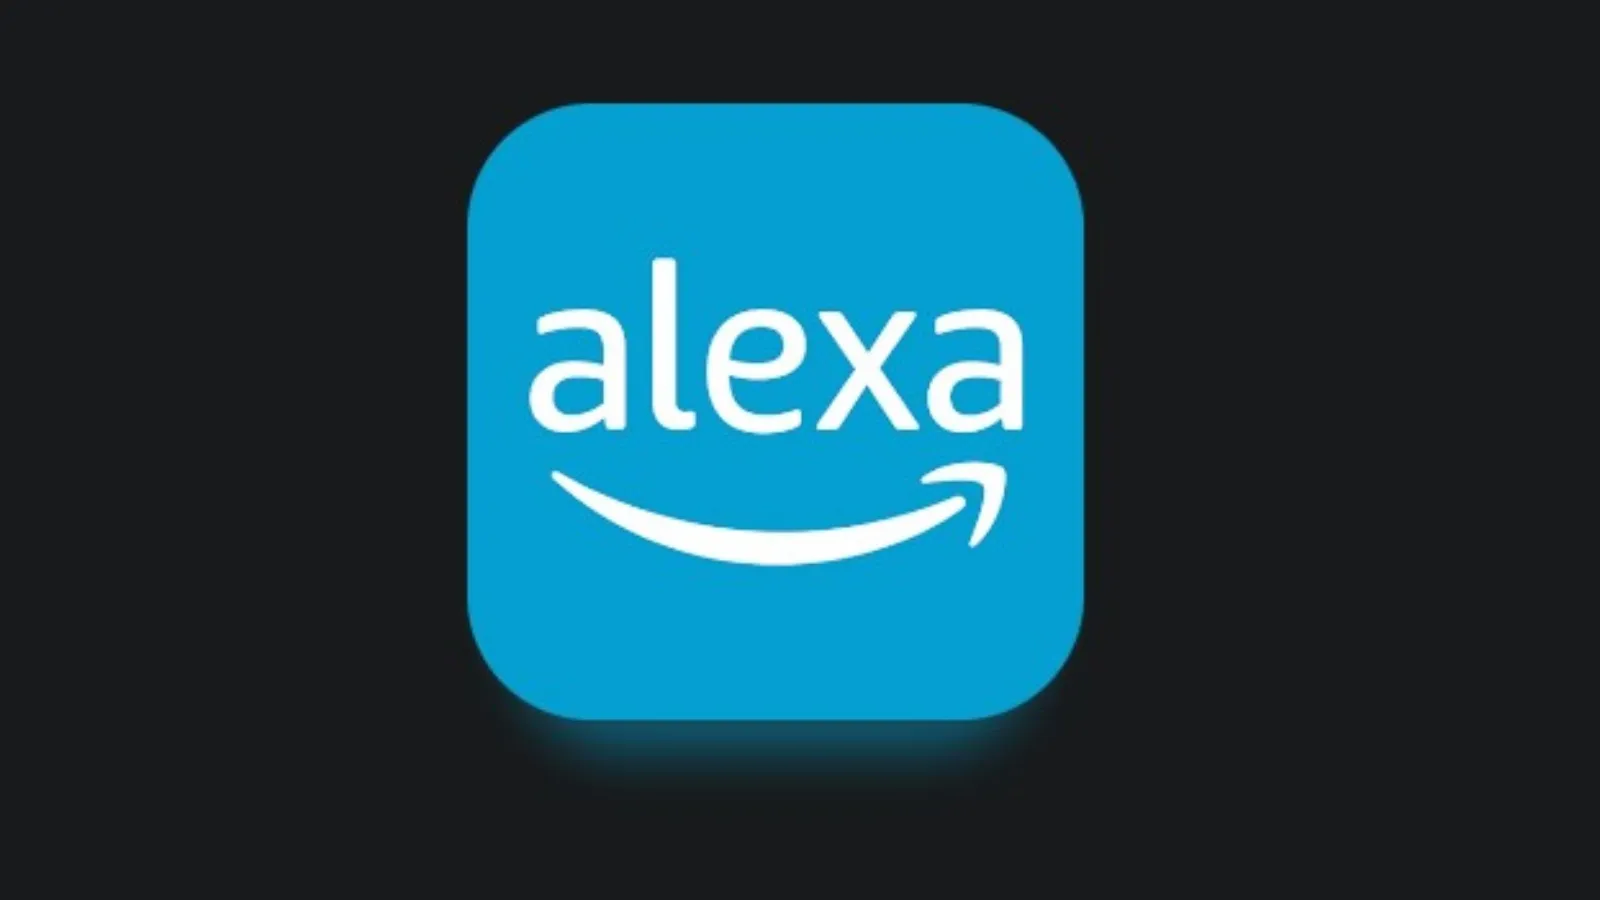 Alexa app update brings redesigned homepage and smart home